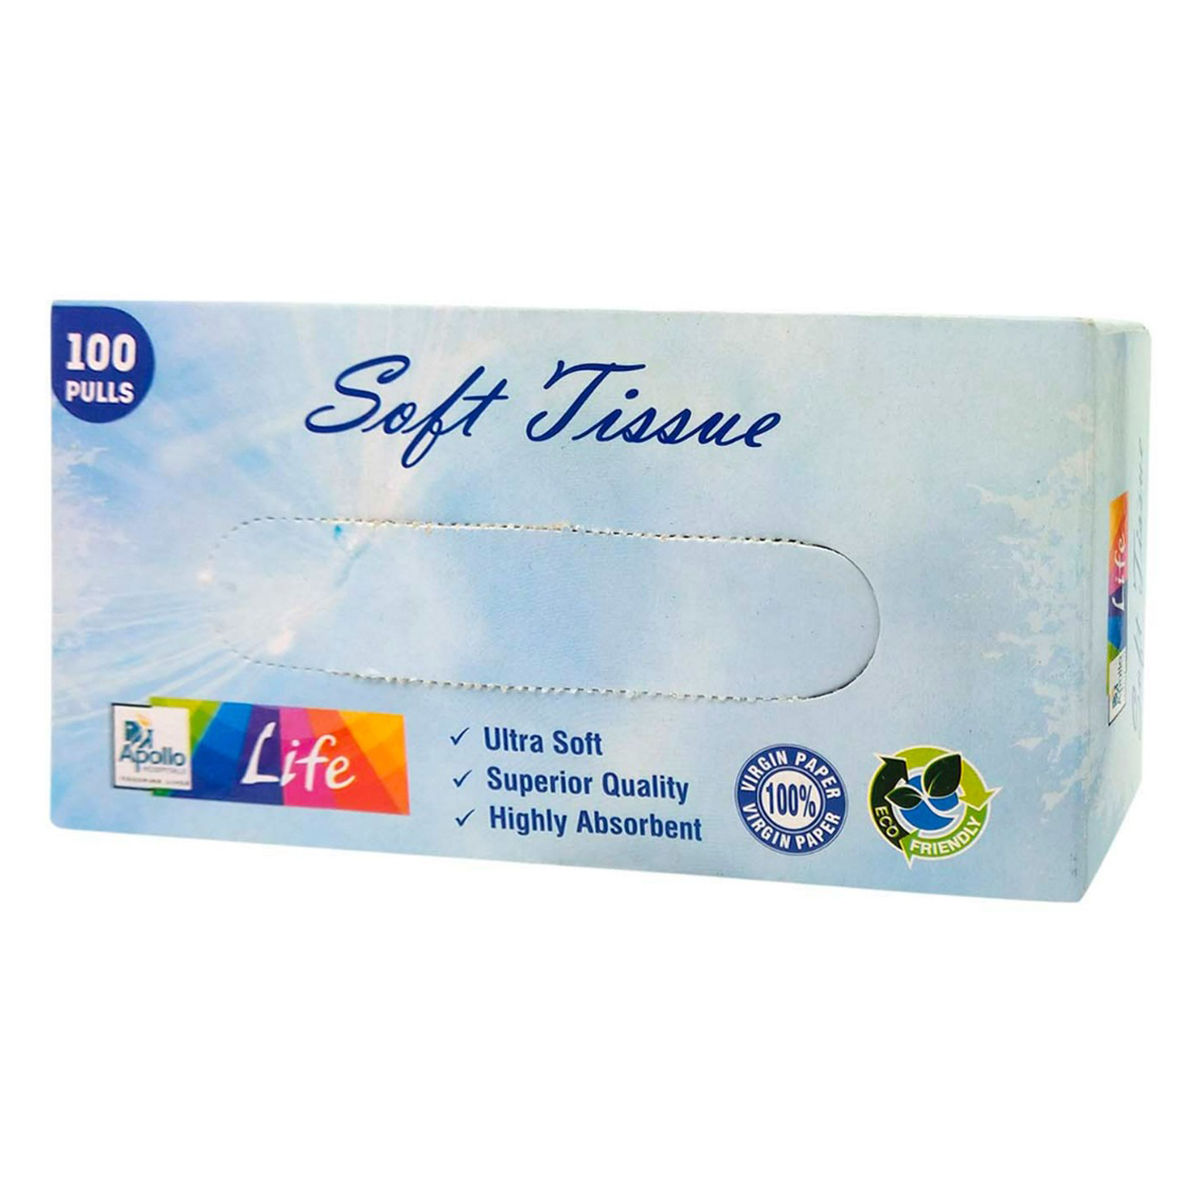 Buy Apollo Life Soft Tissue, 100 Count Online